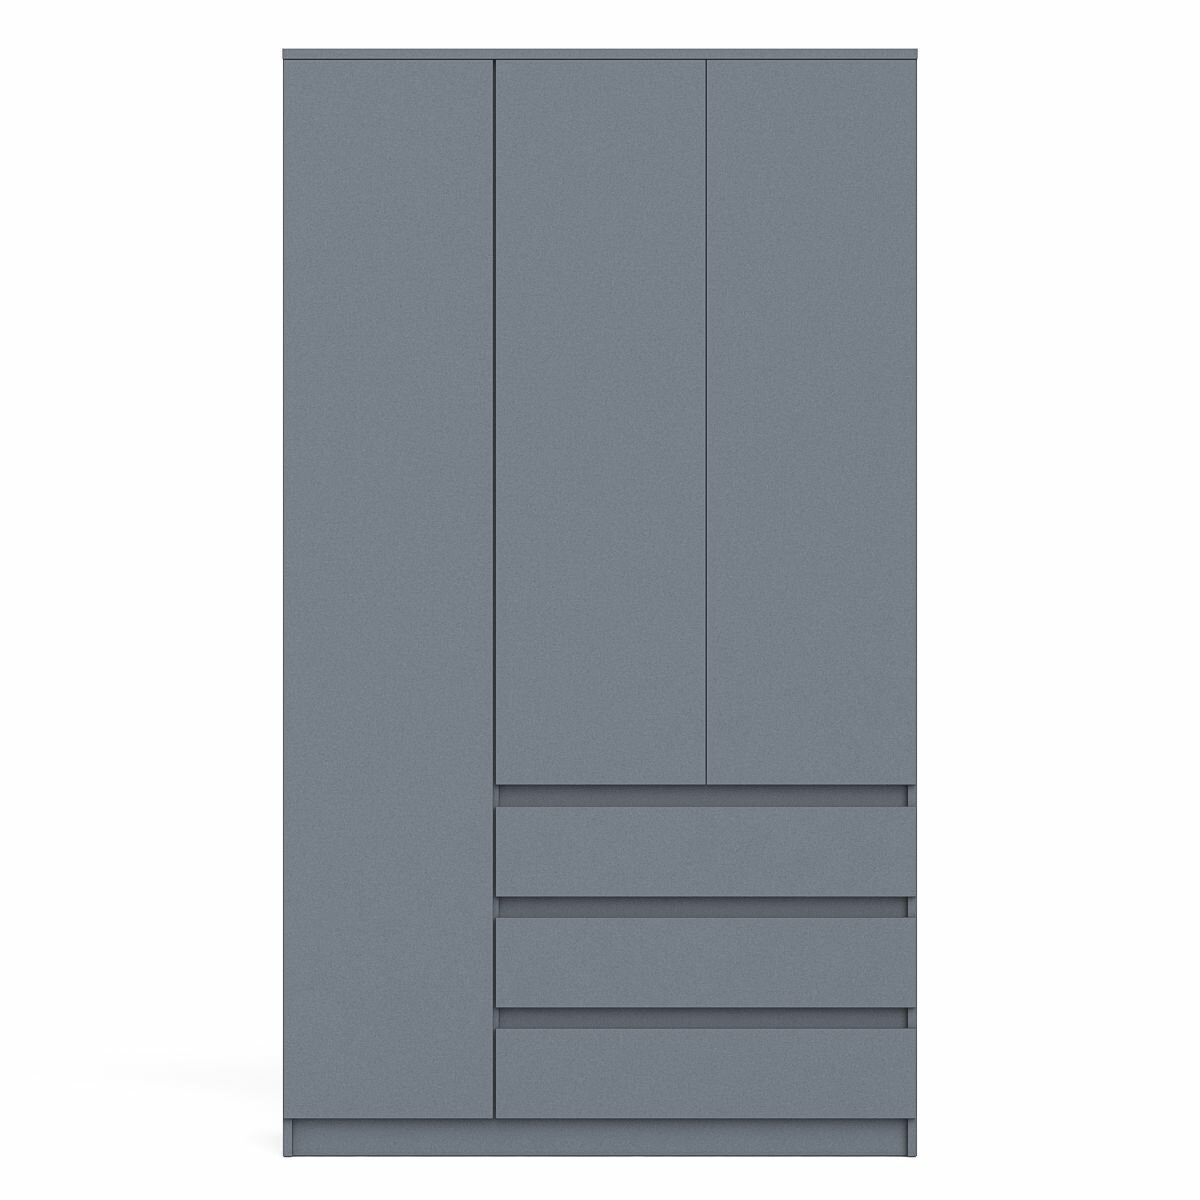 Широкий шкаф-комод Мори МШ1200.1 цвет графит, ШхГхВ 120,4х50,4х209,6 см, НЕ универсальная сборка